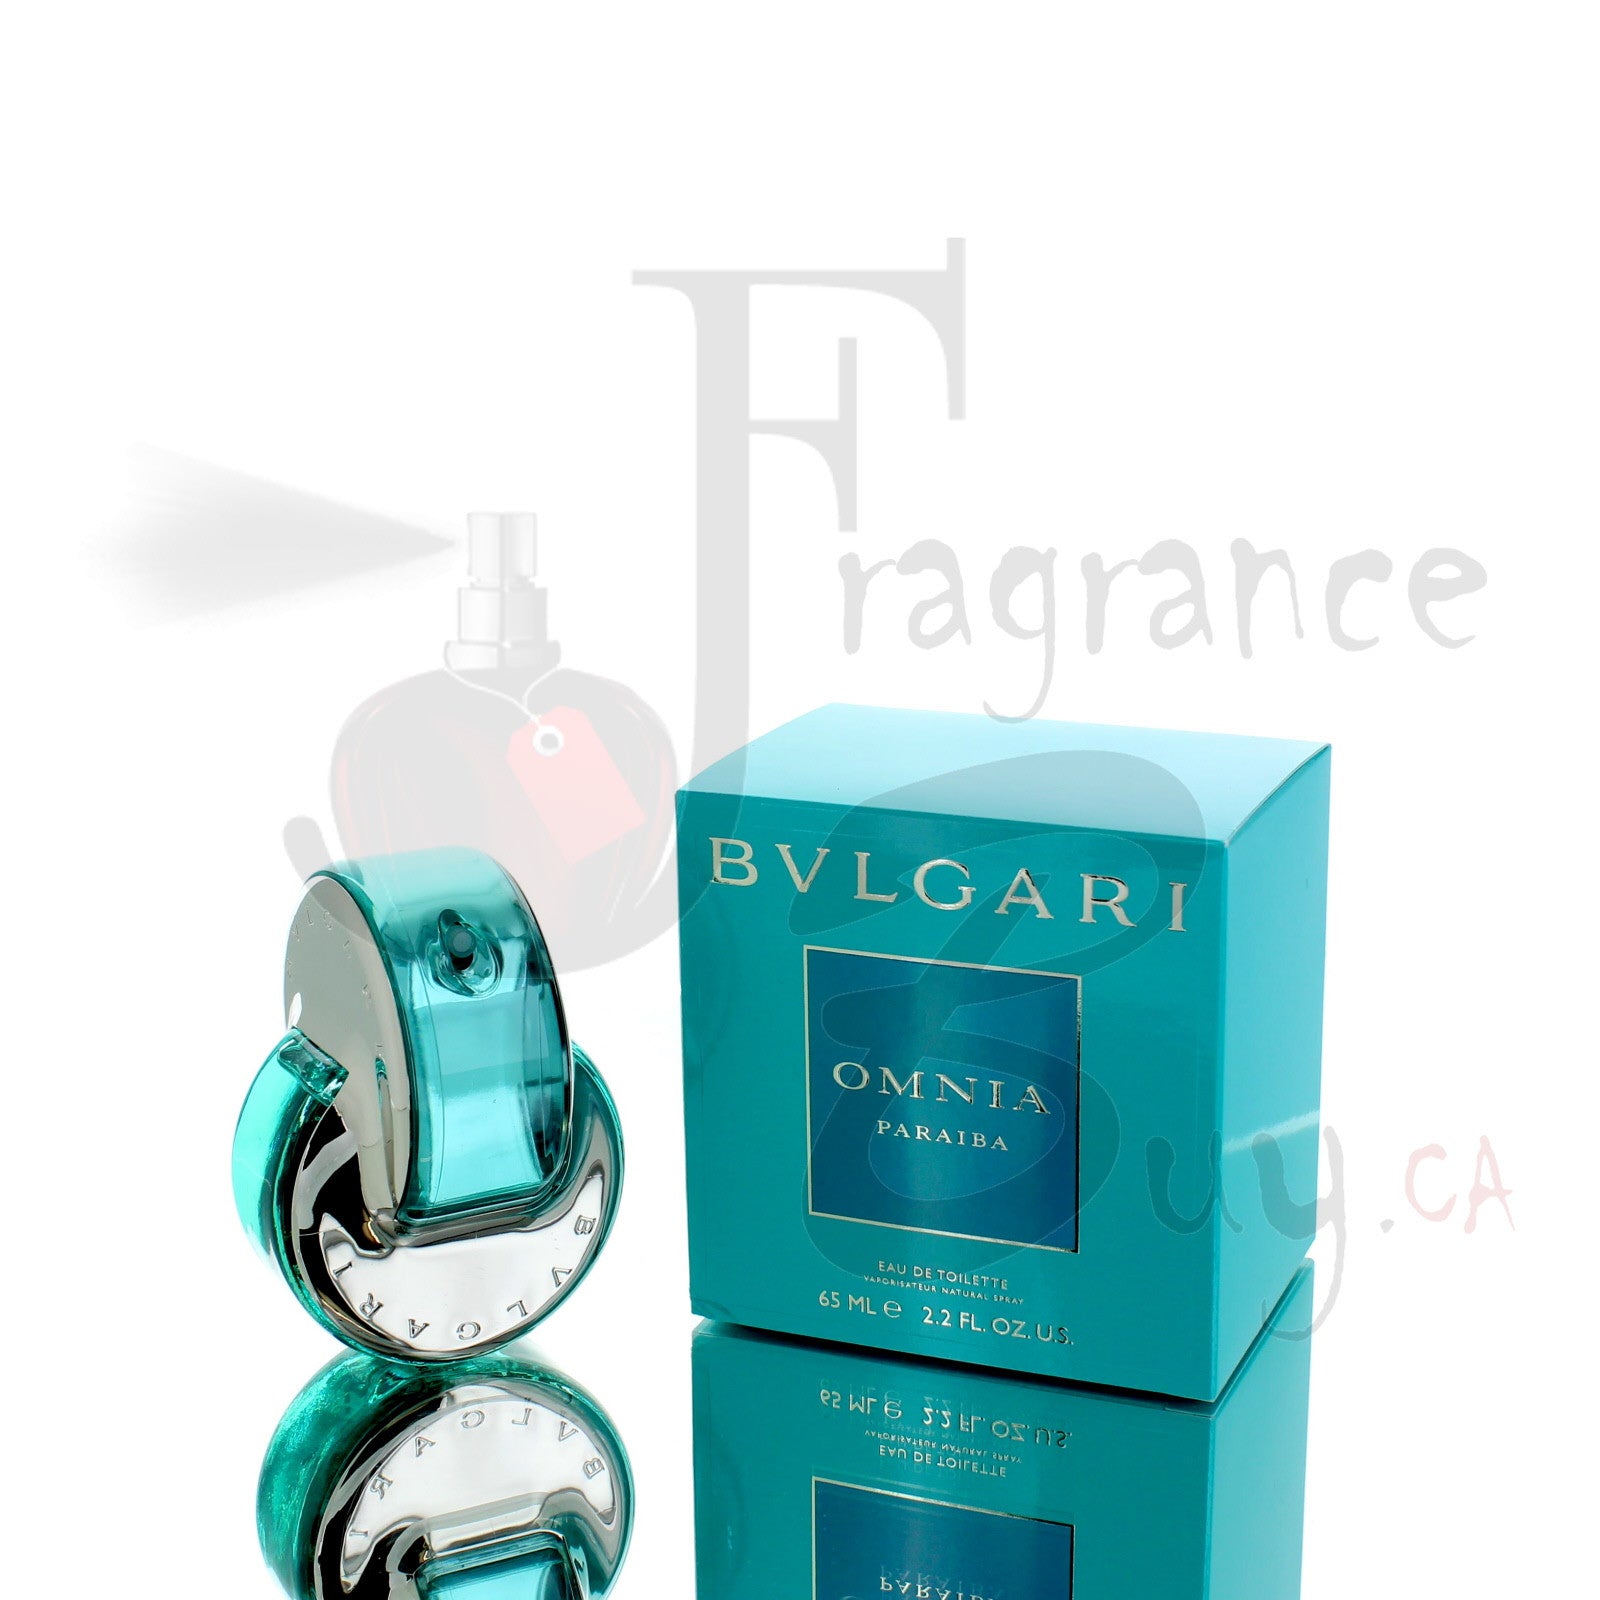 bvlgari omnia paraiba perfume price